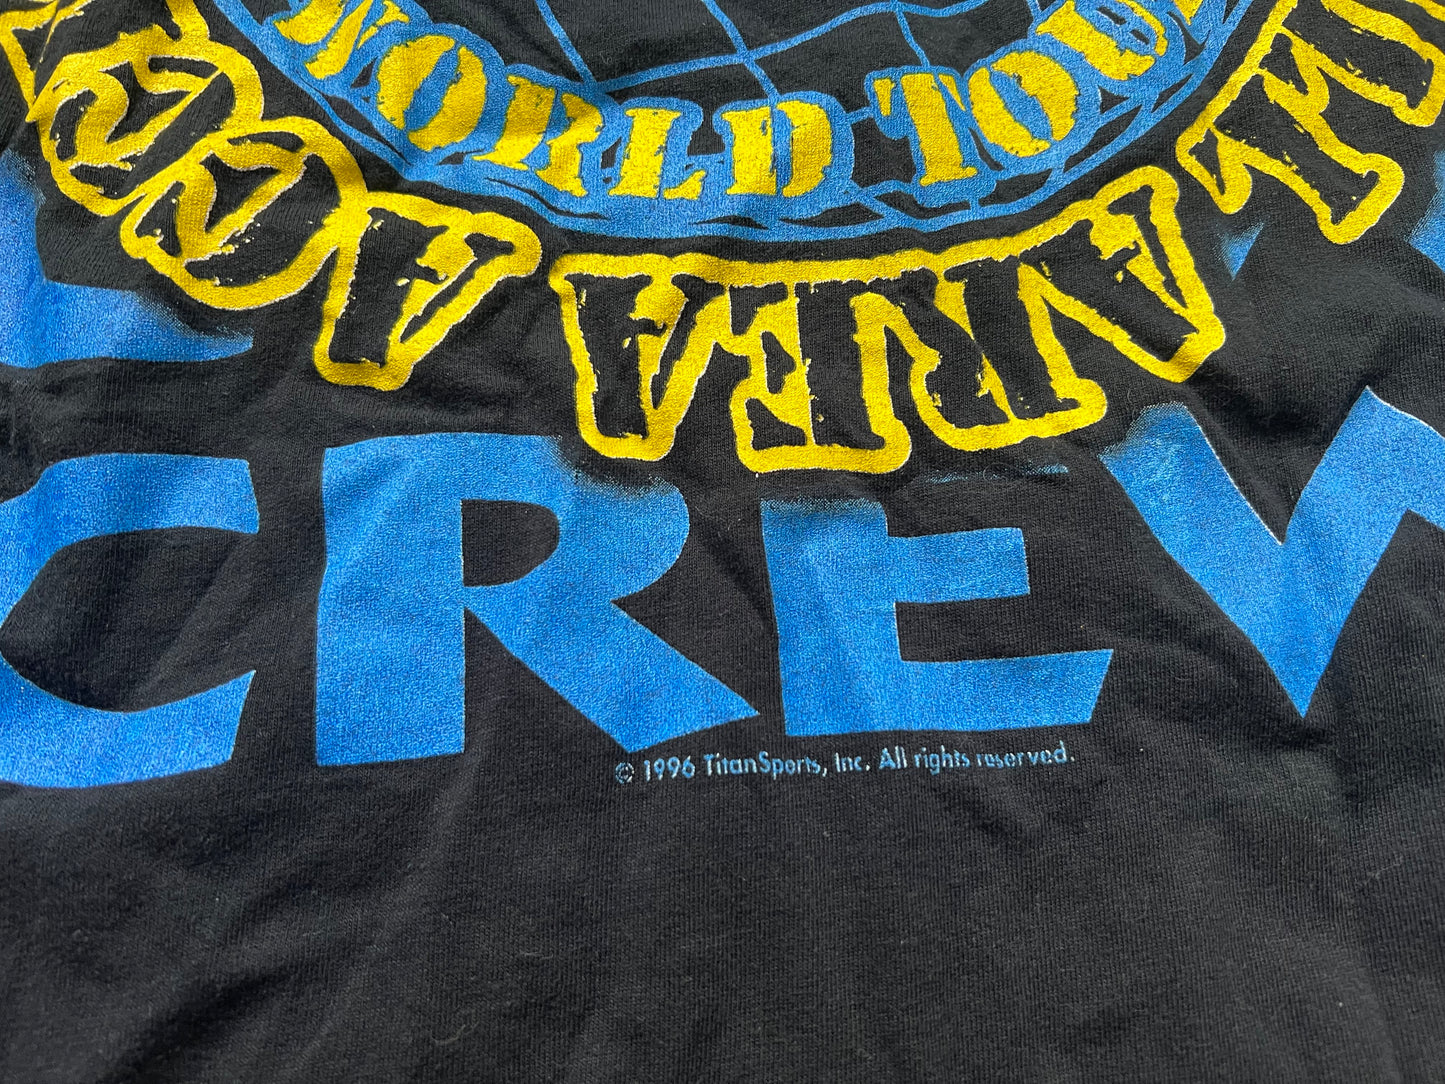 1996 WWF Crew shirt